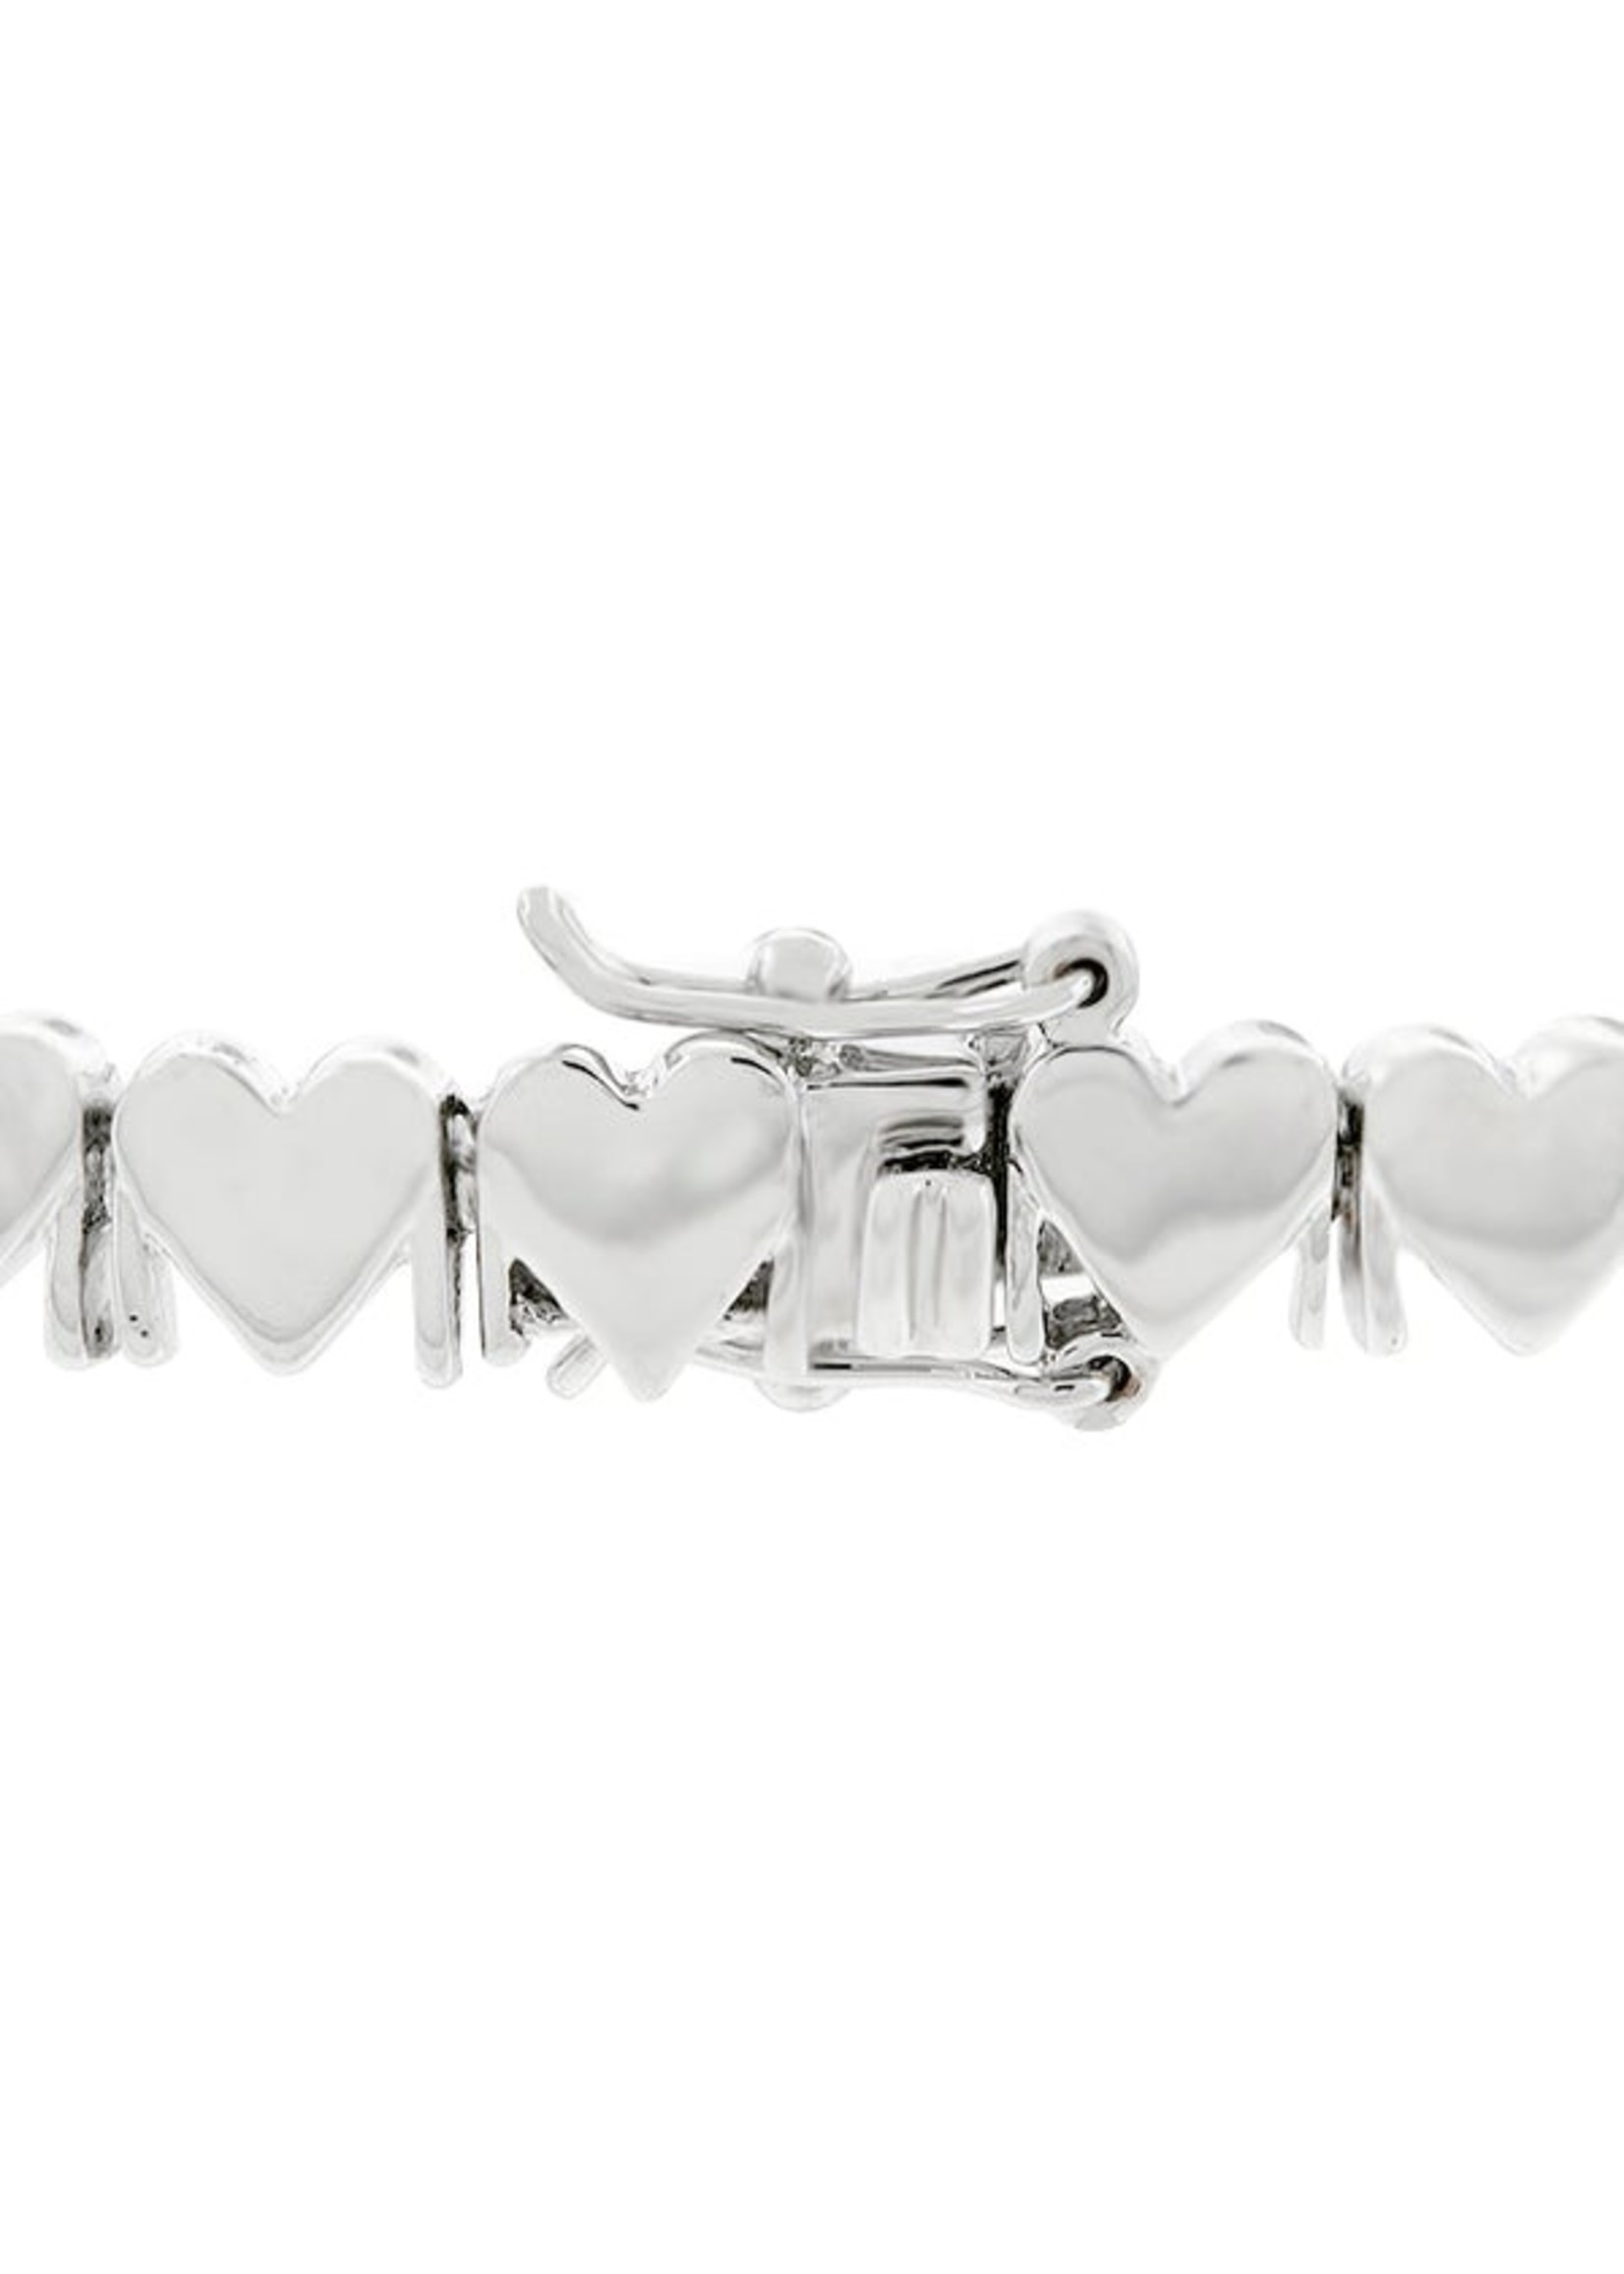 KDesign Regal Collection Mom's Day Charm Bracelet